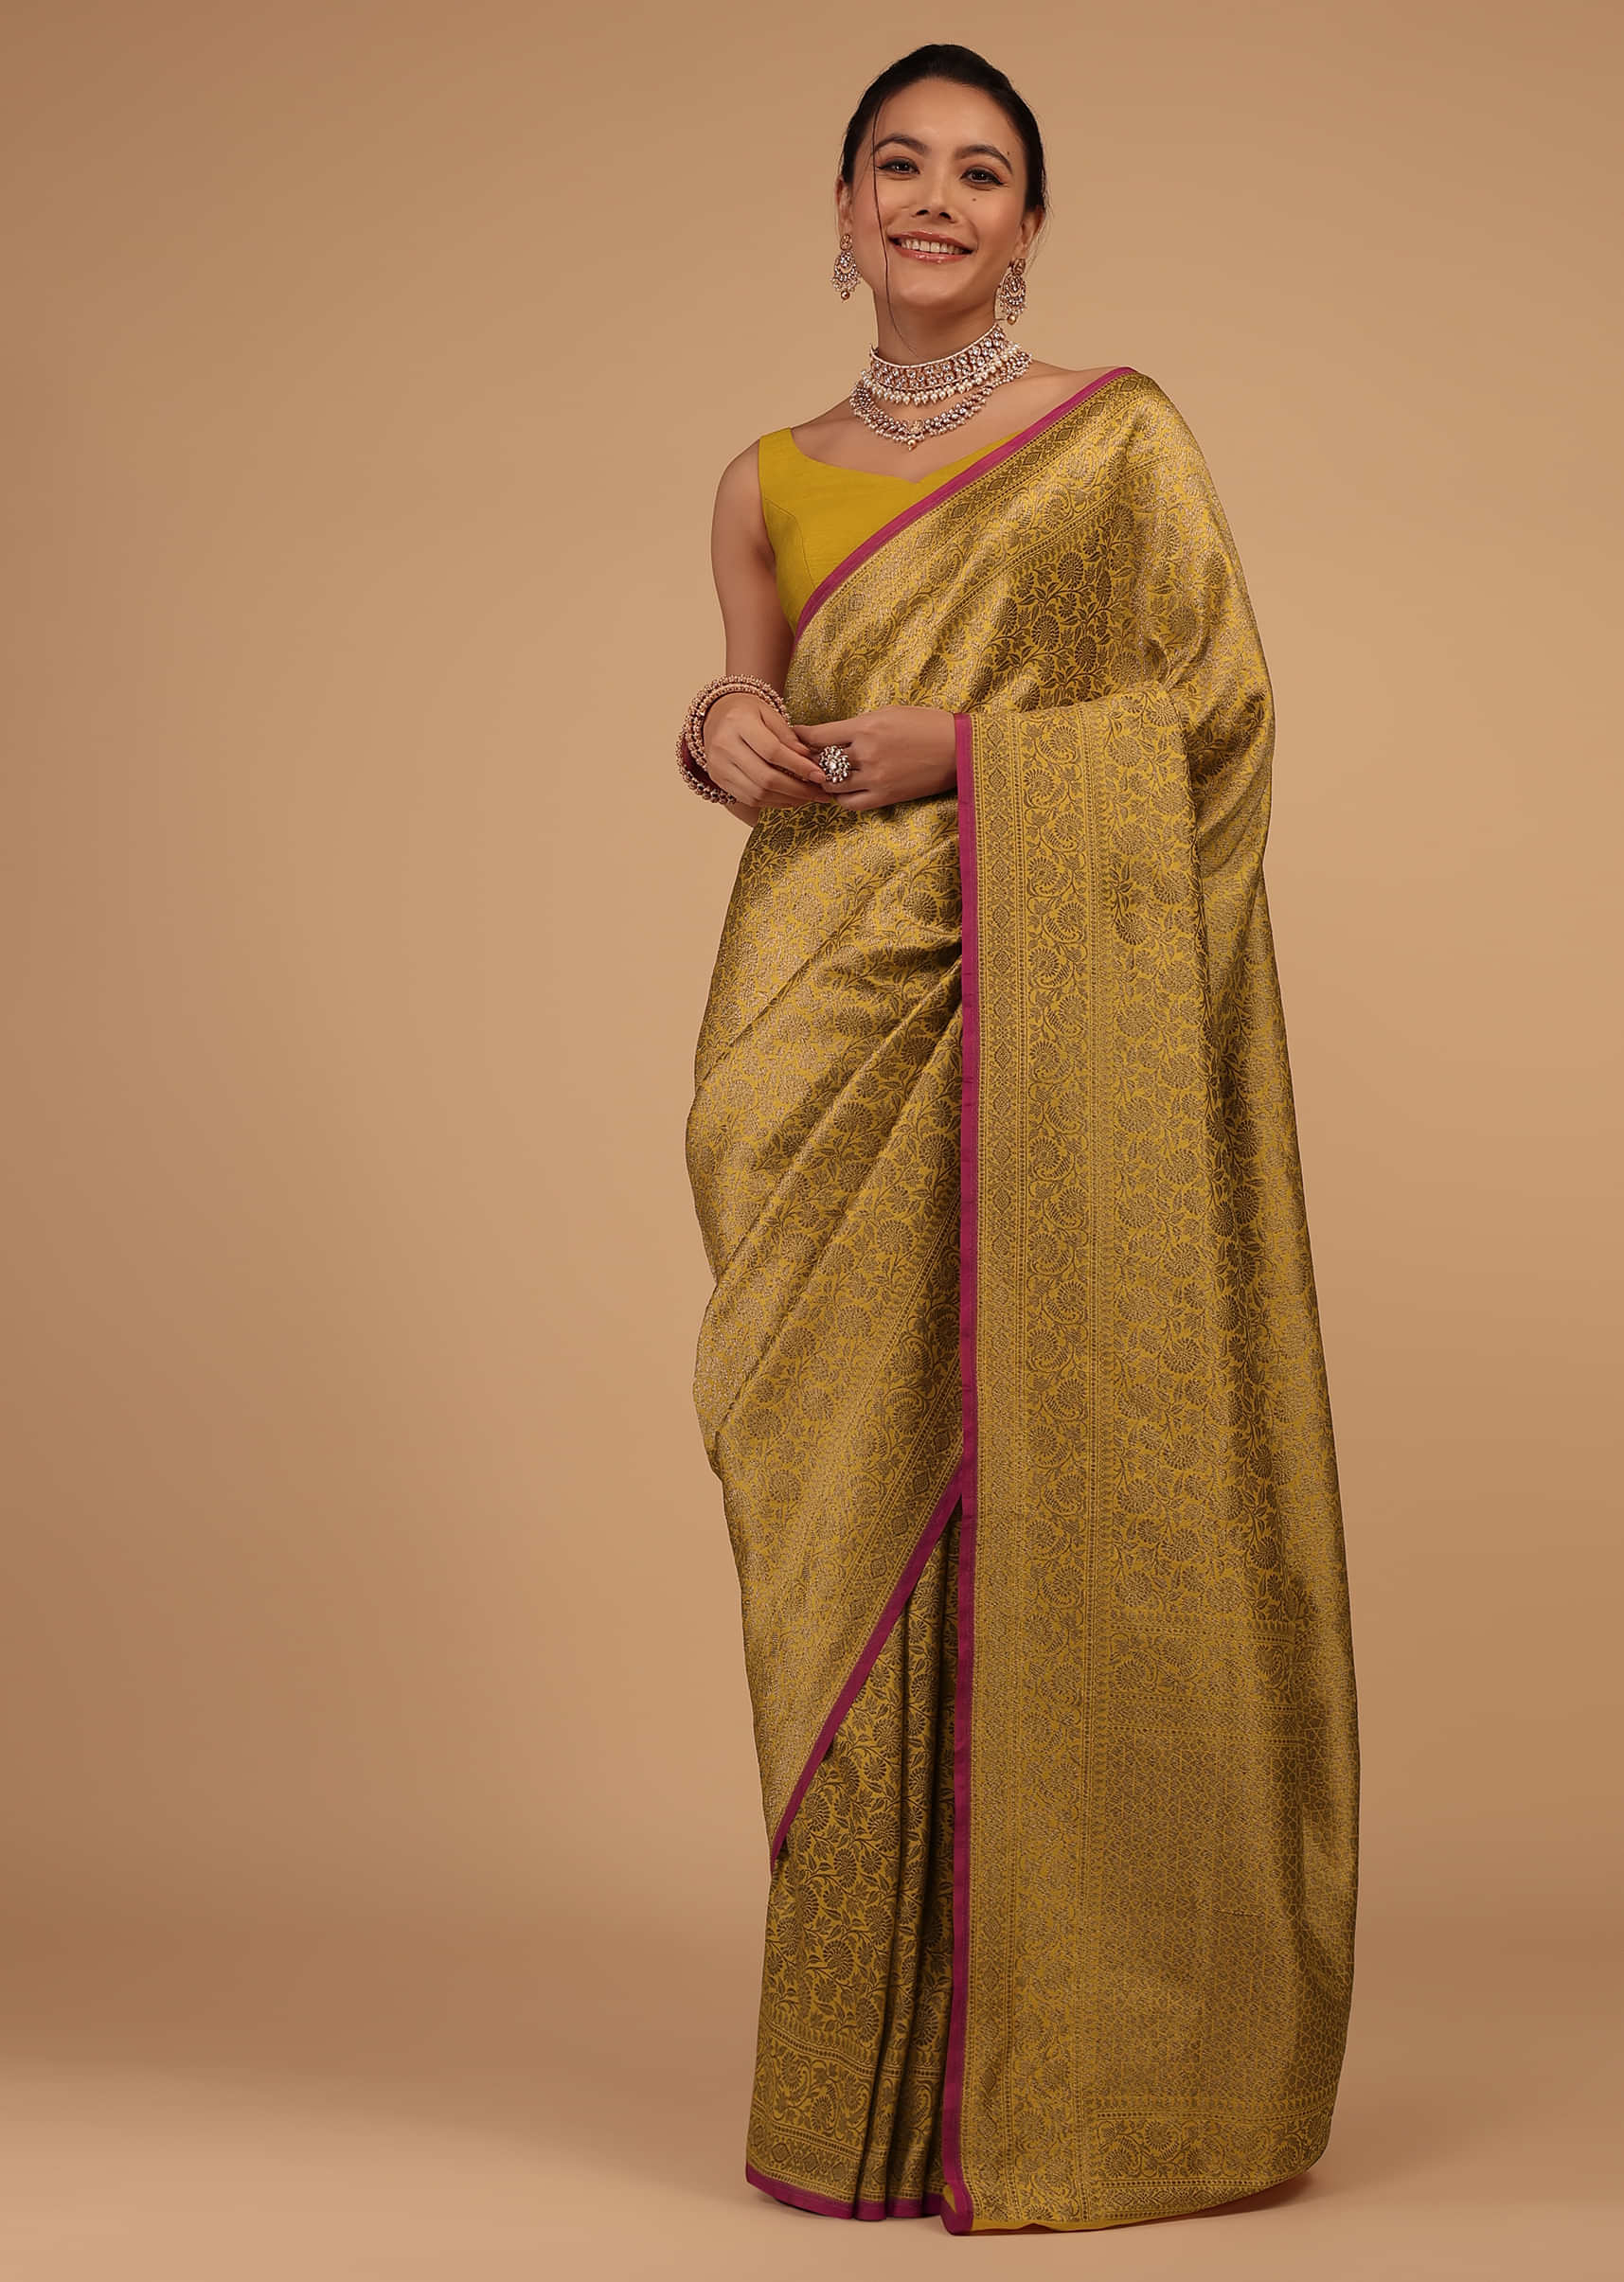 Buy YURENUS FASHION Women's kanchi pattu kanchipuram silk Saree with Blouse  (yellow Colour) at Amazon.in